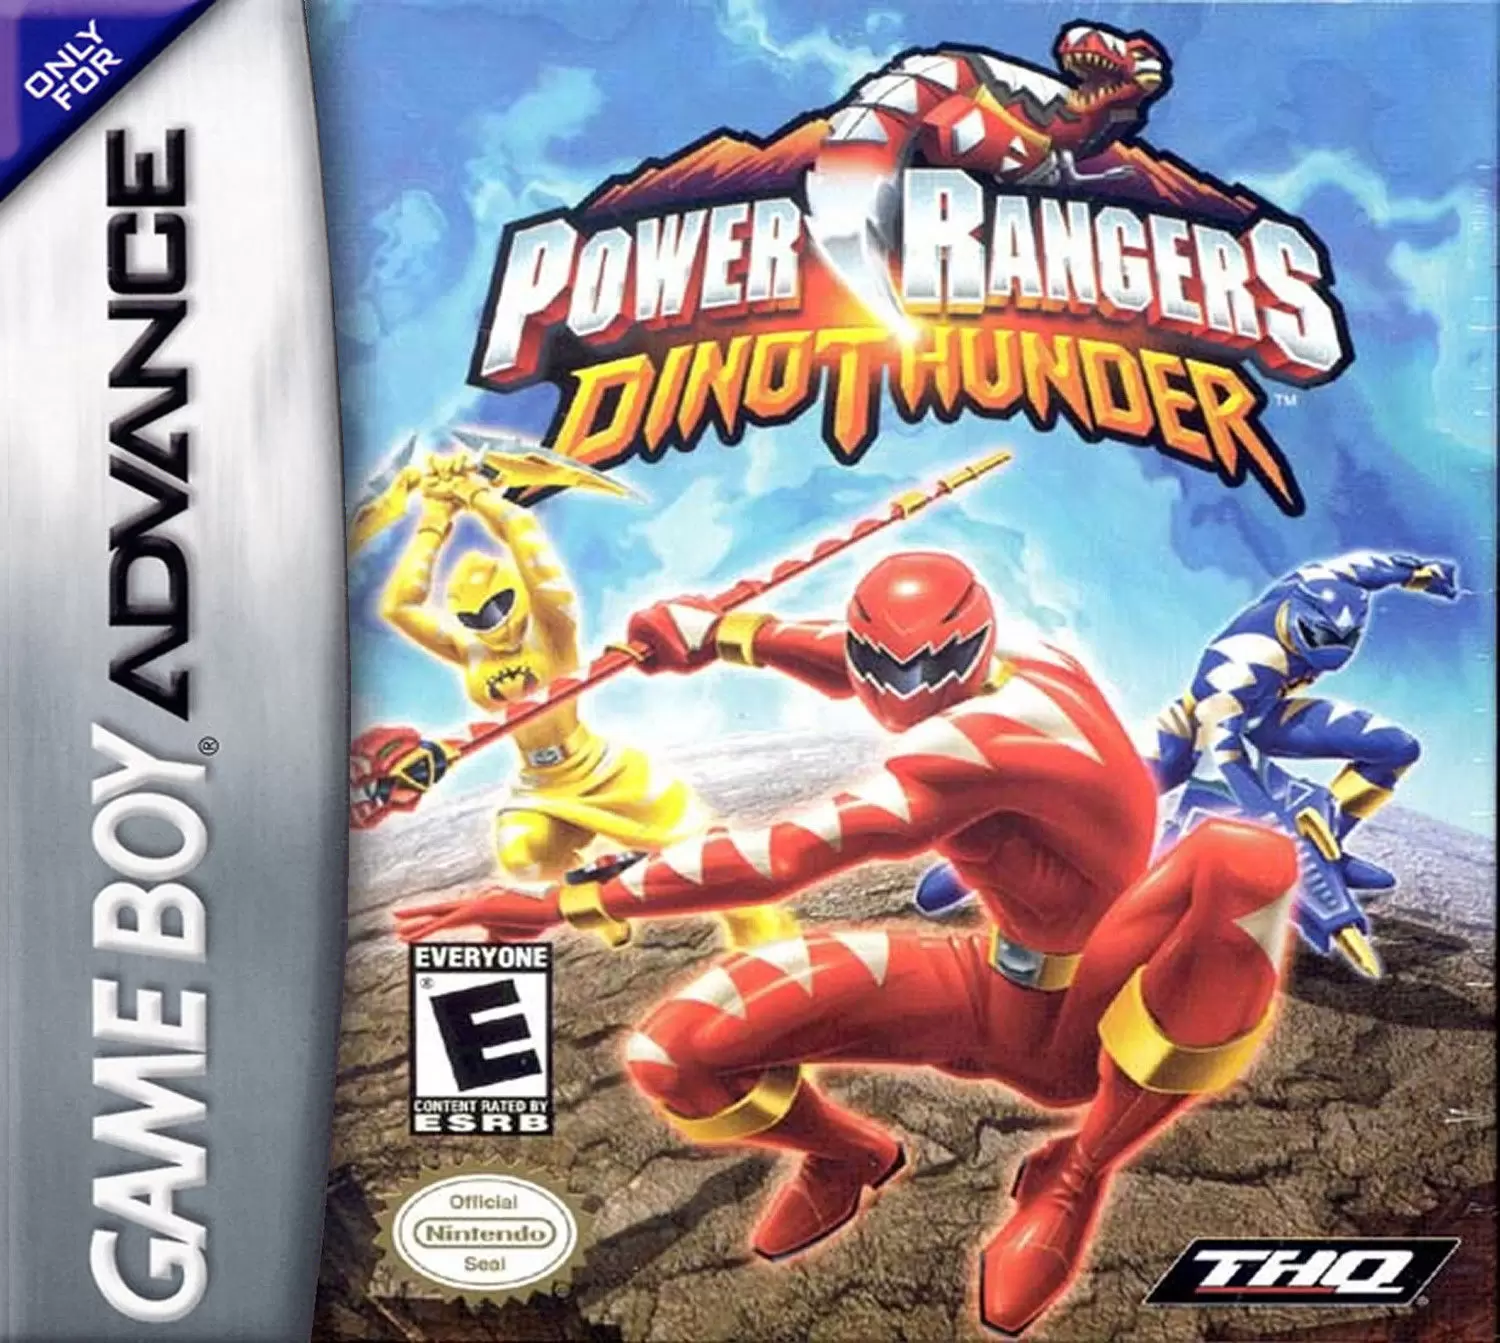 Game Boy Advance Games - Power Rangers: Dino Thunder